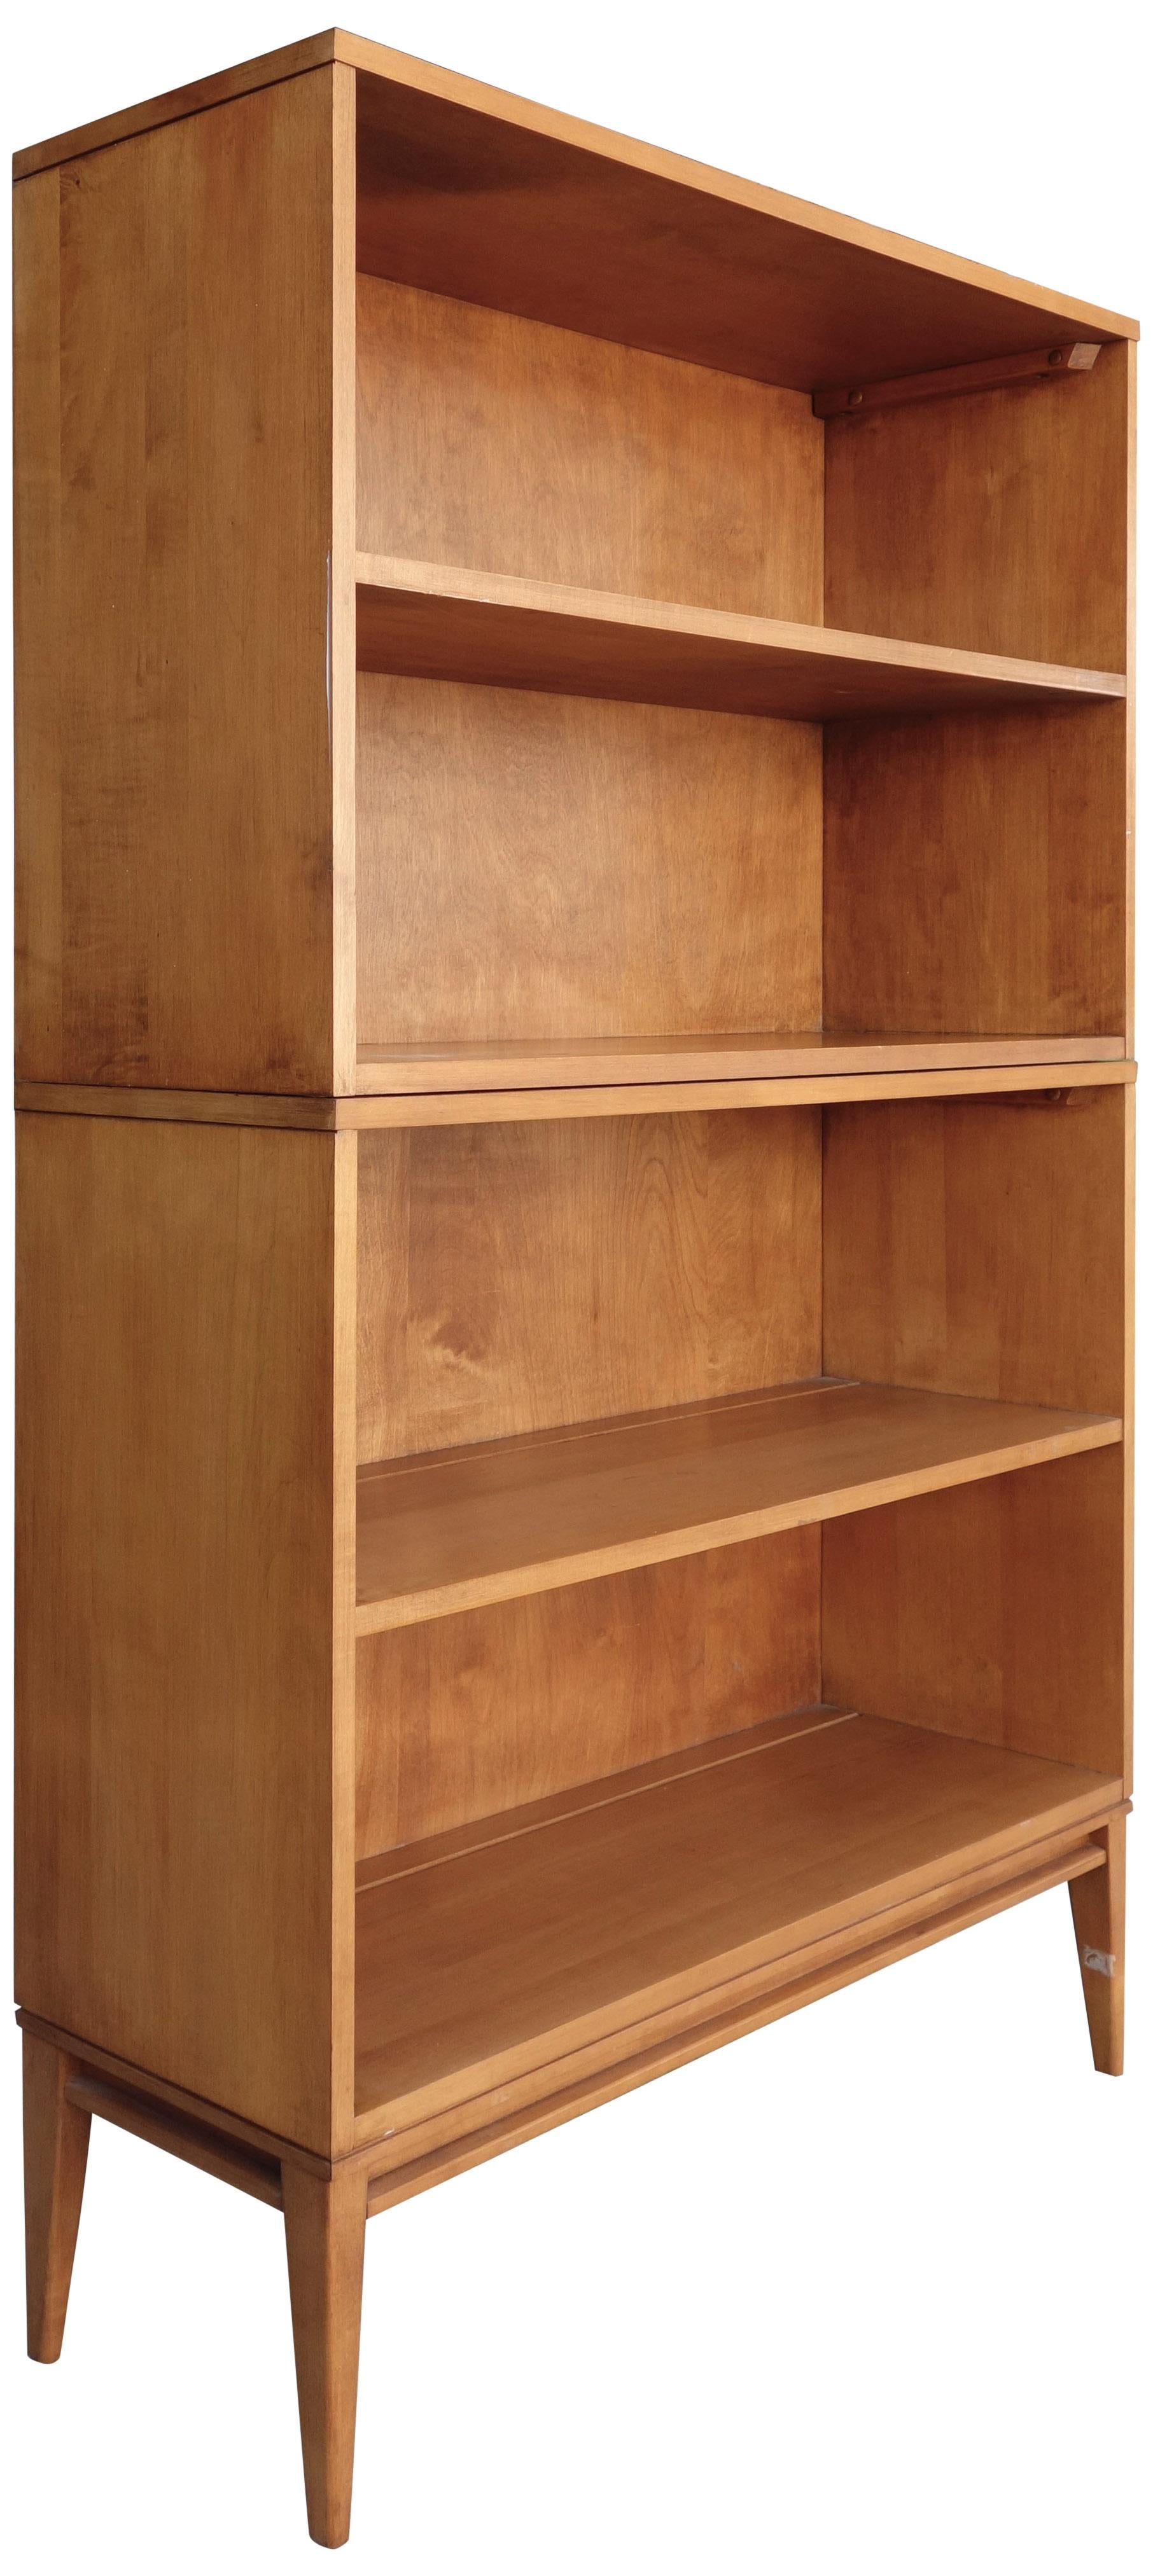 American Midcentury Paul McCobb Double Bookcase #1516 Maple on Wood Base